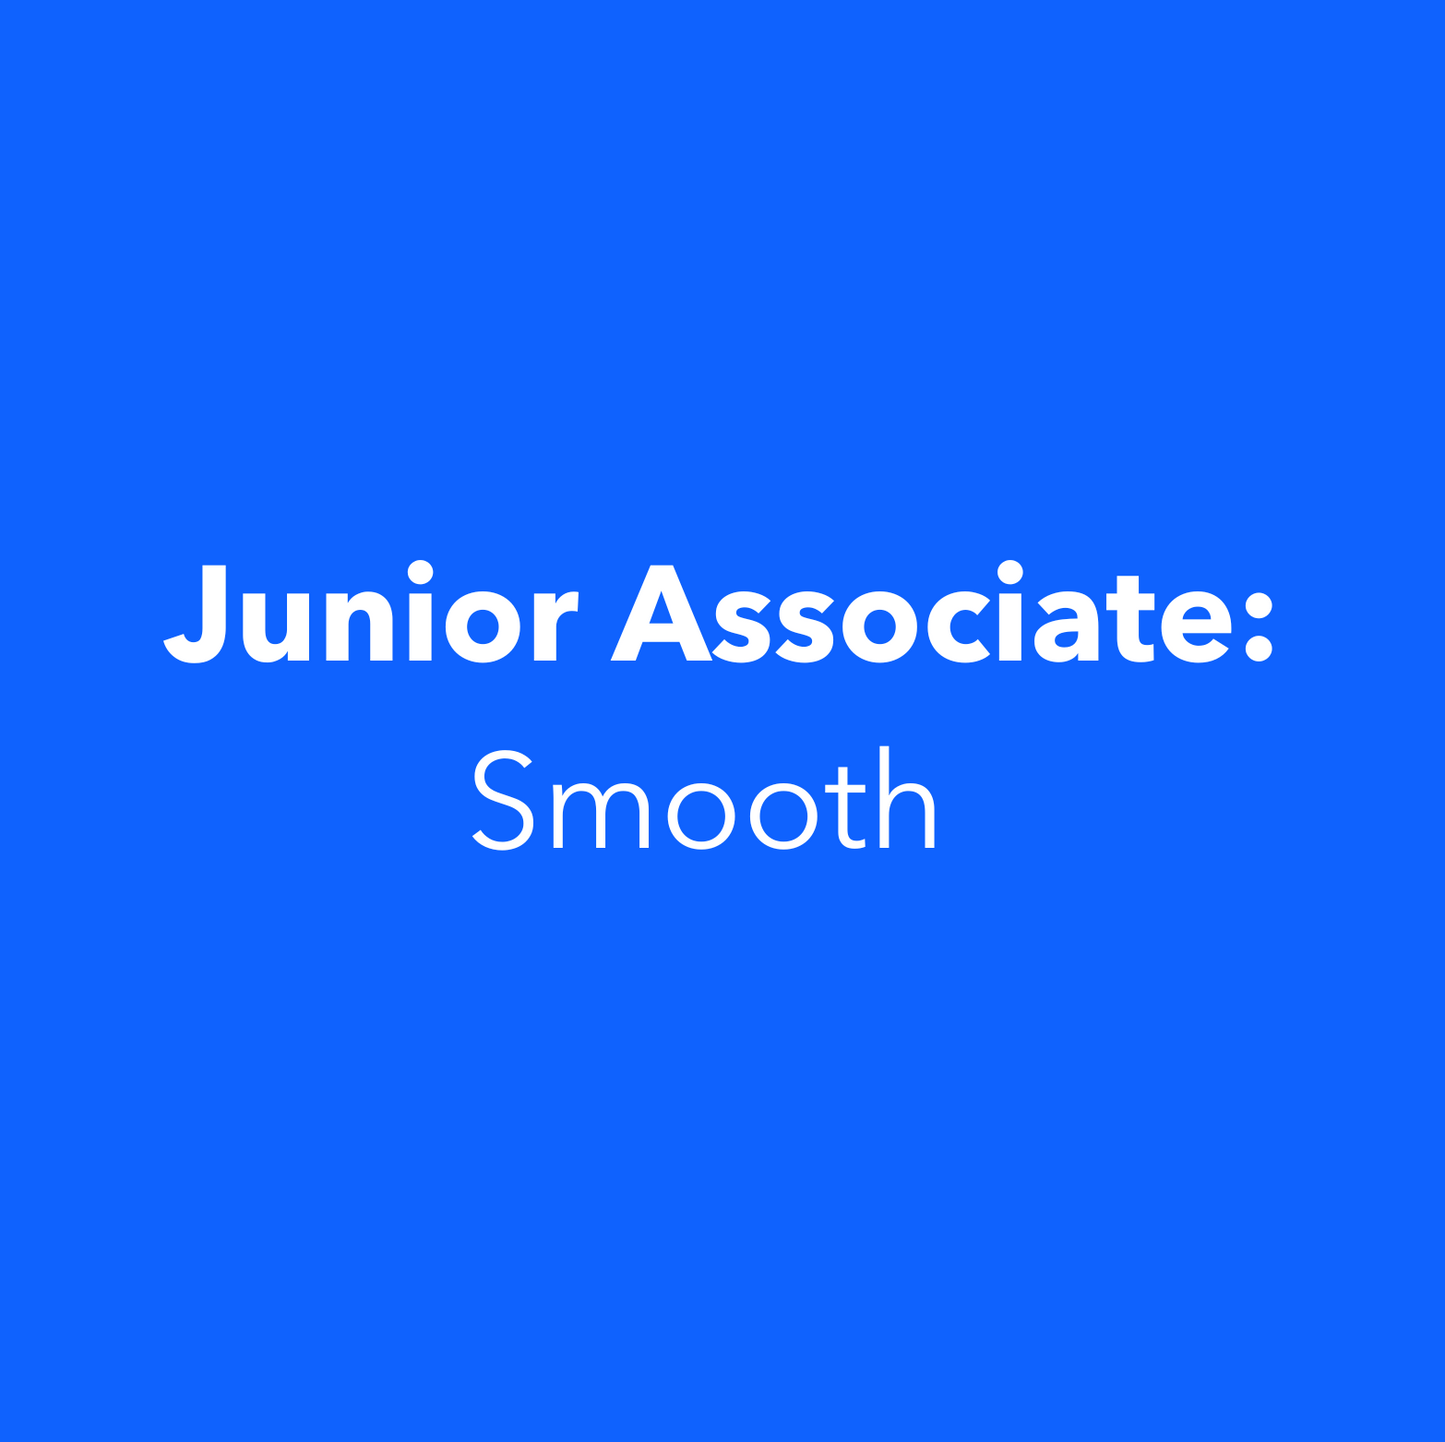 Junior Associate: Smooth